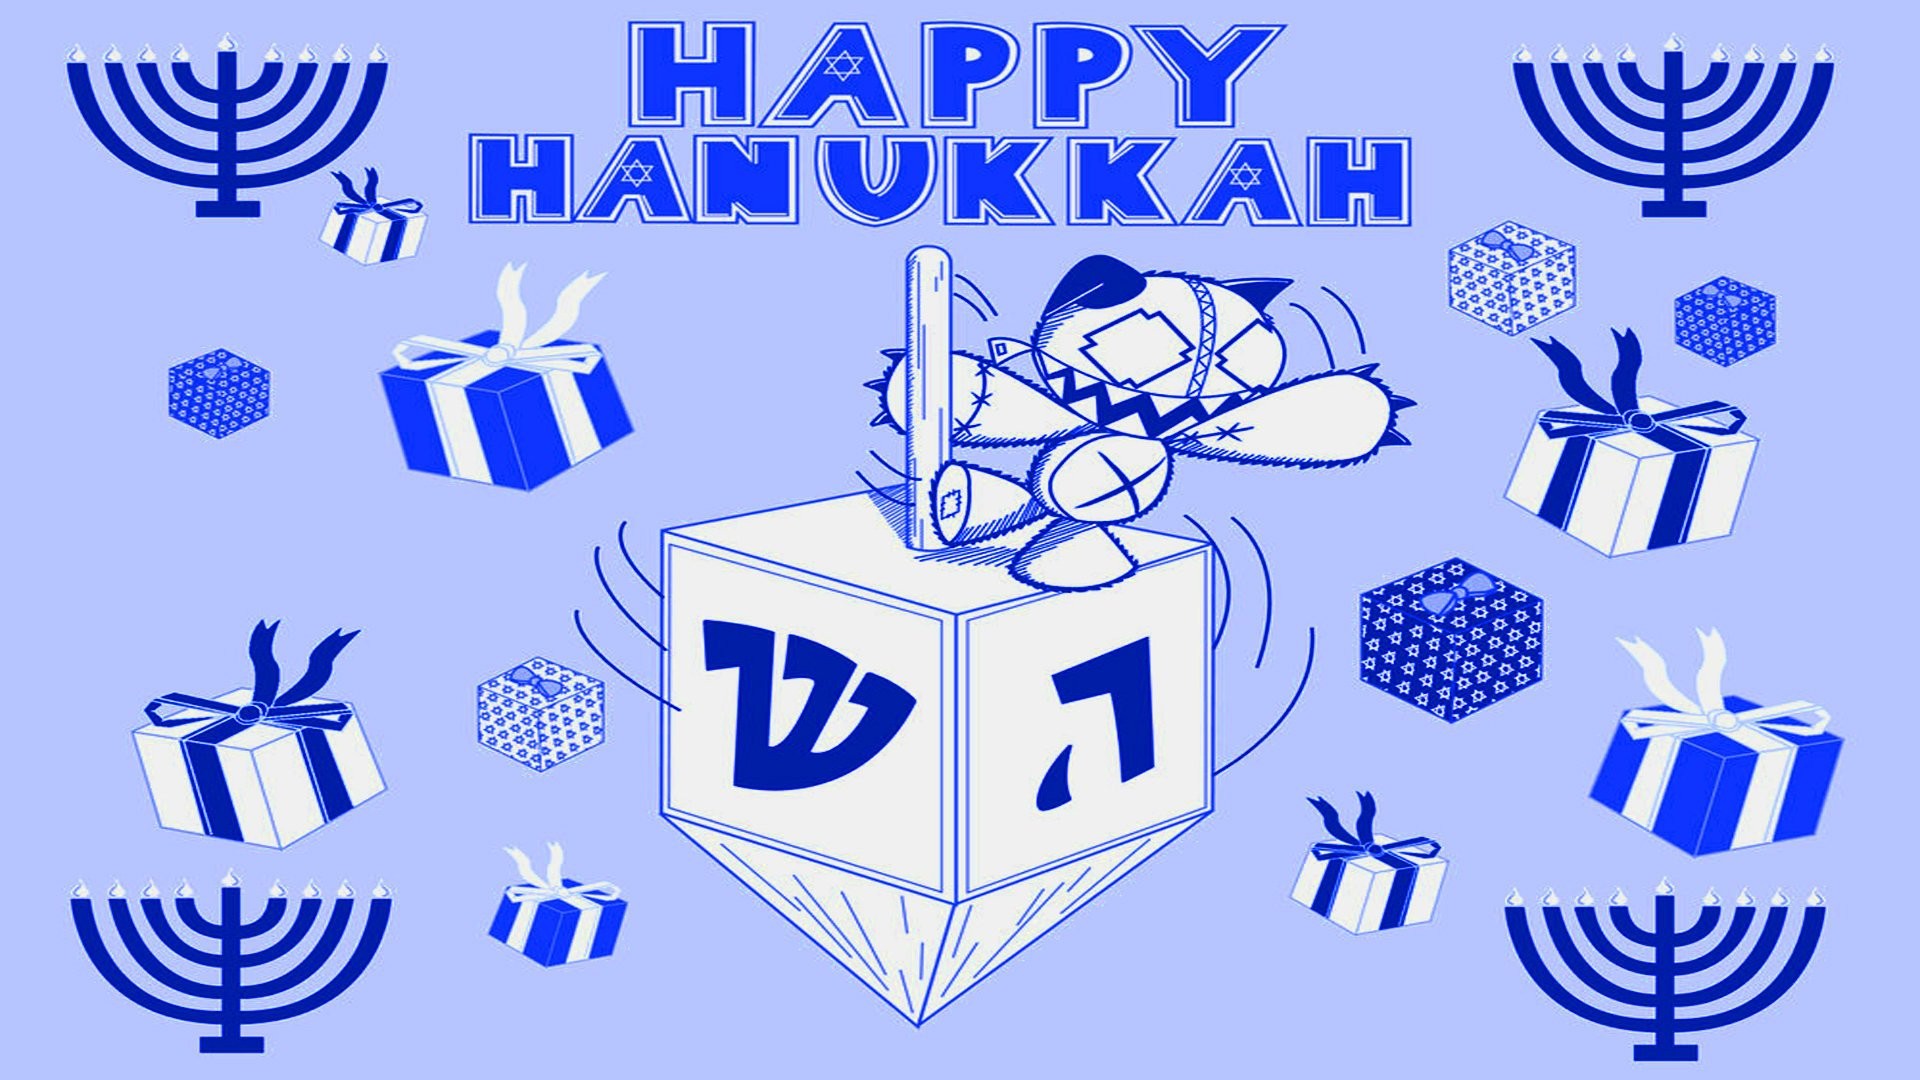 Festival Menorah Candle Stock Image Background Hanukkah